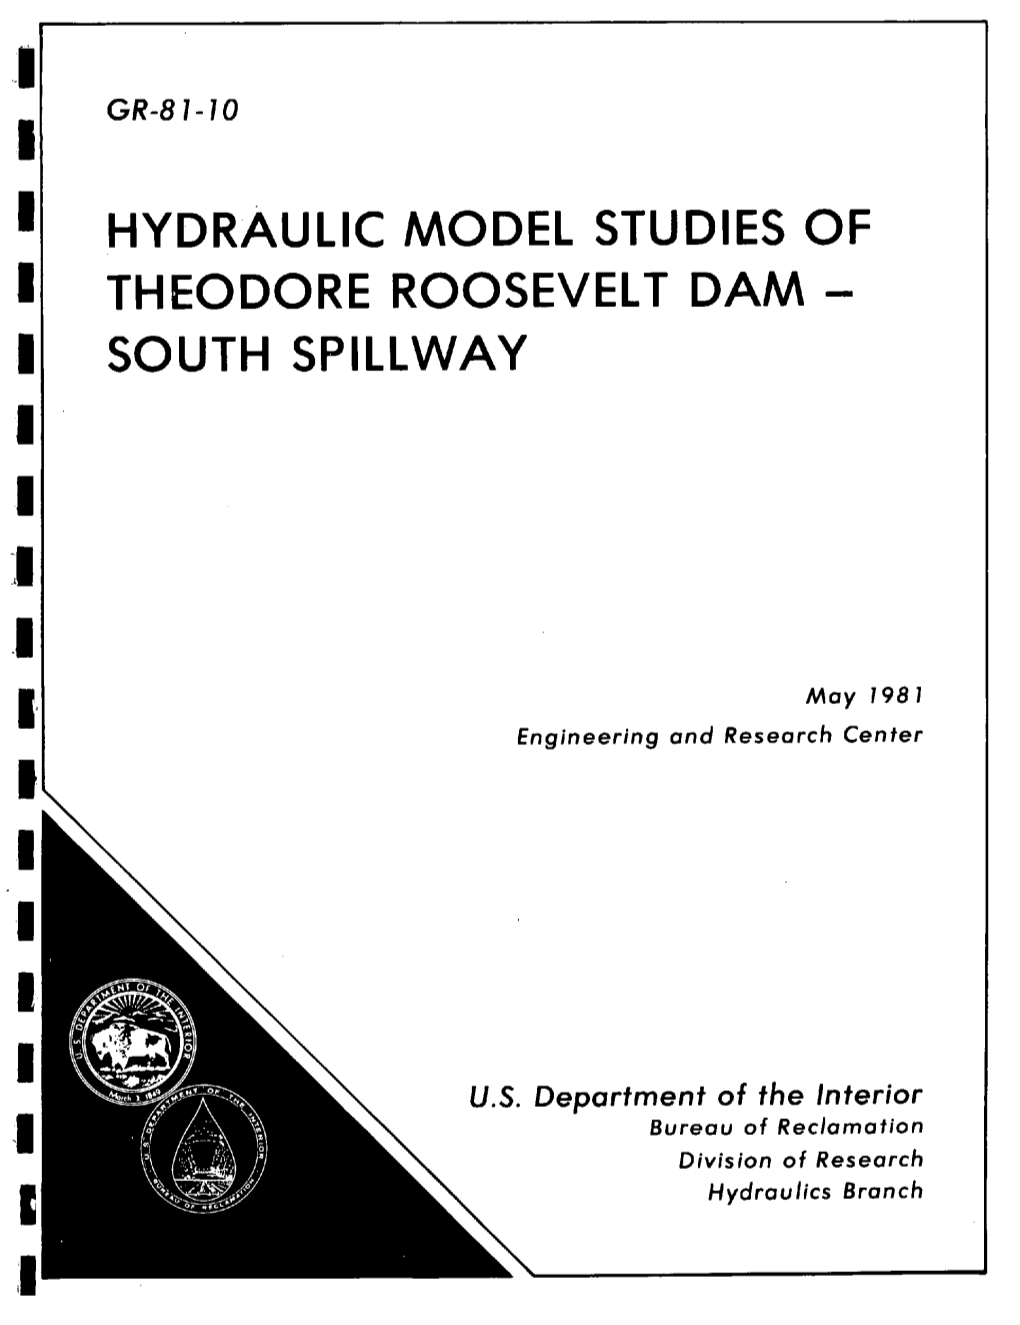 Hydraulic Model Studies of Theodore Roosevelt Dam- South Spillway